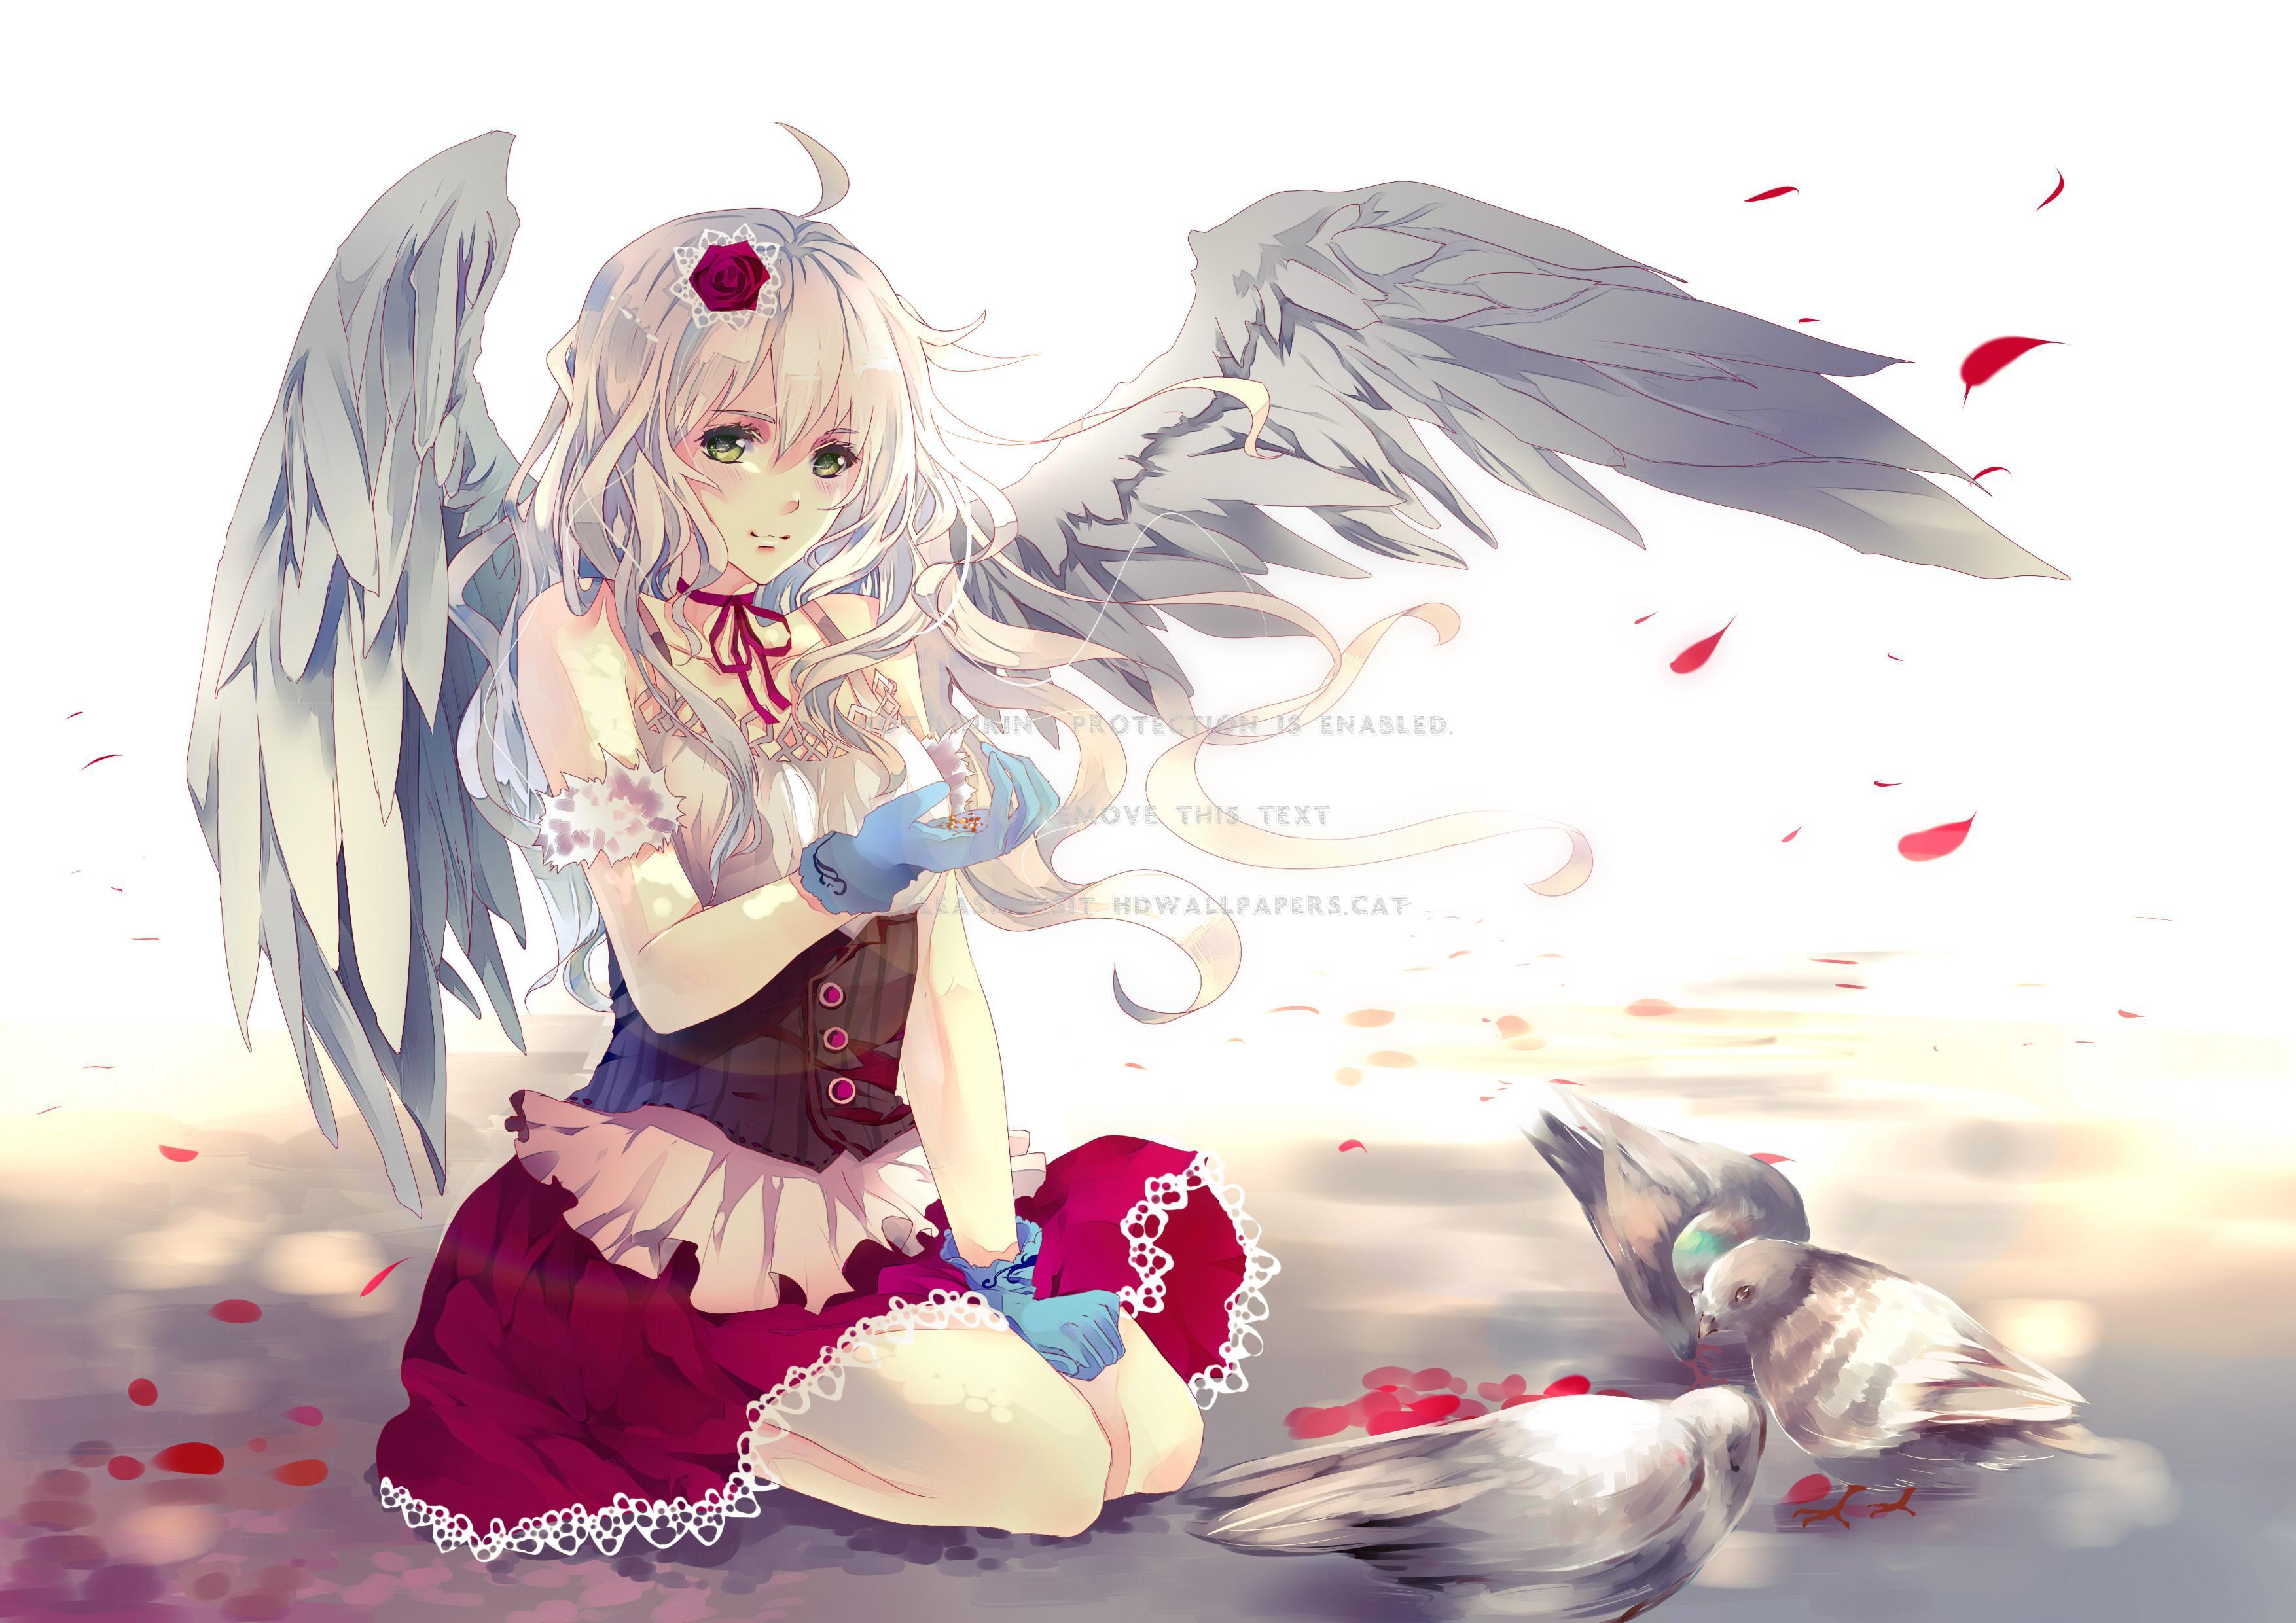 anime angel fantasy girl dress rose petals